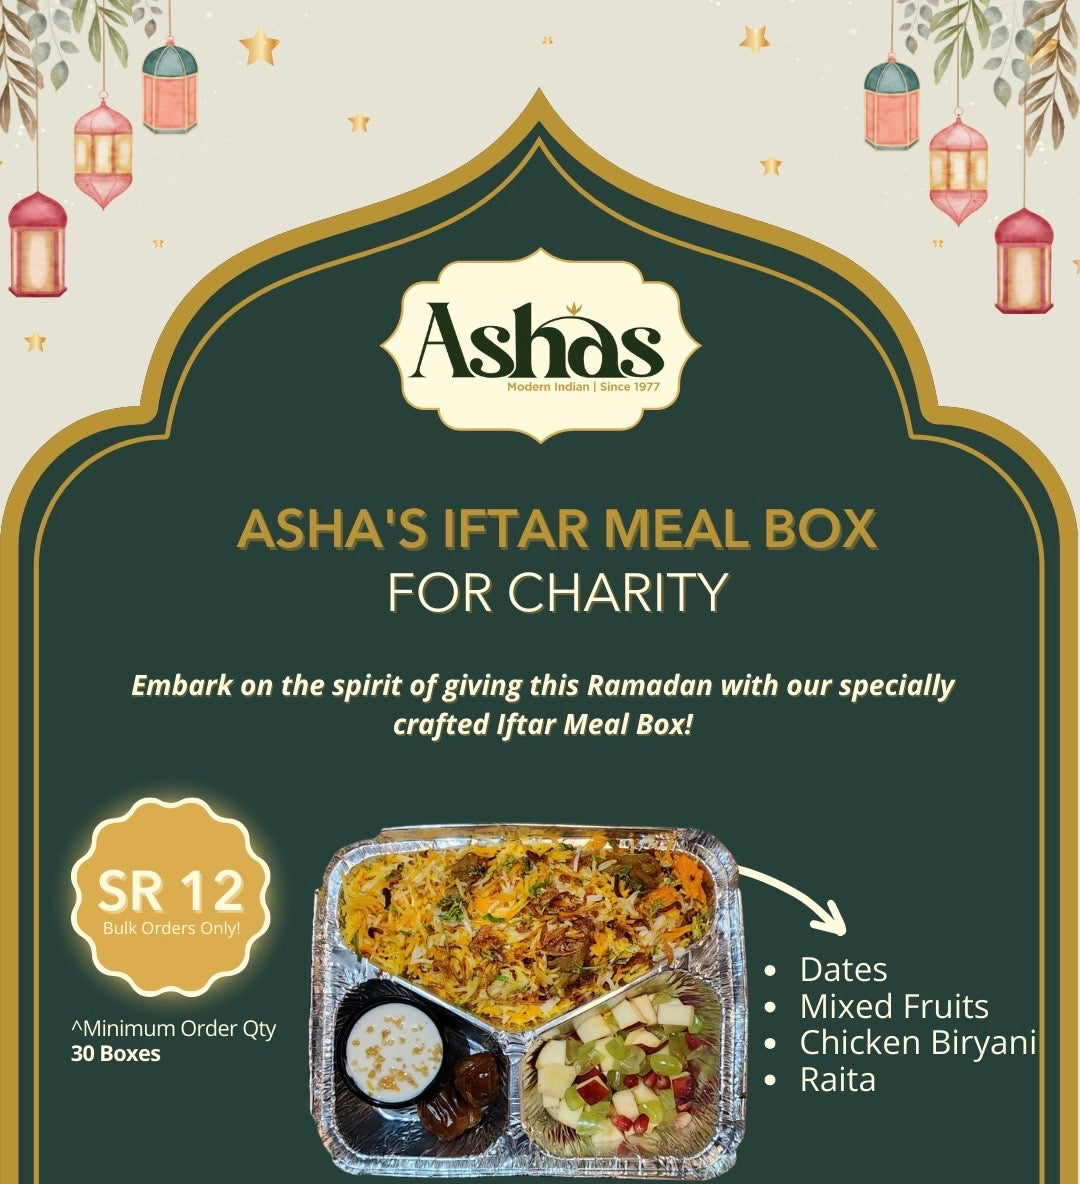 Ashas Charity Box